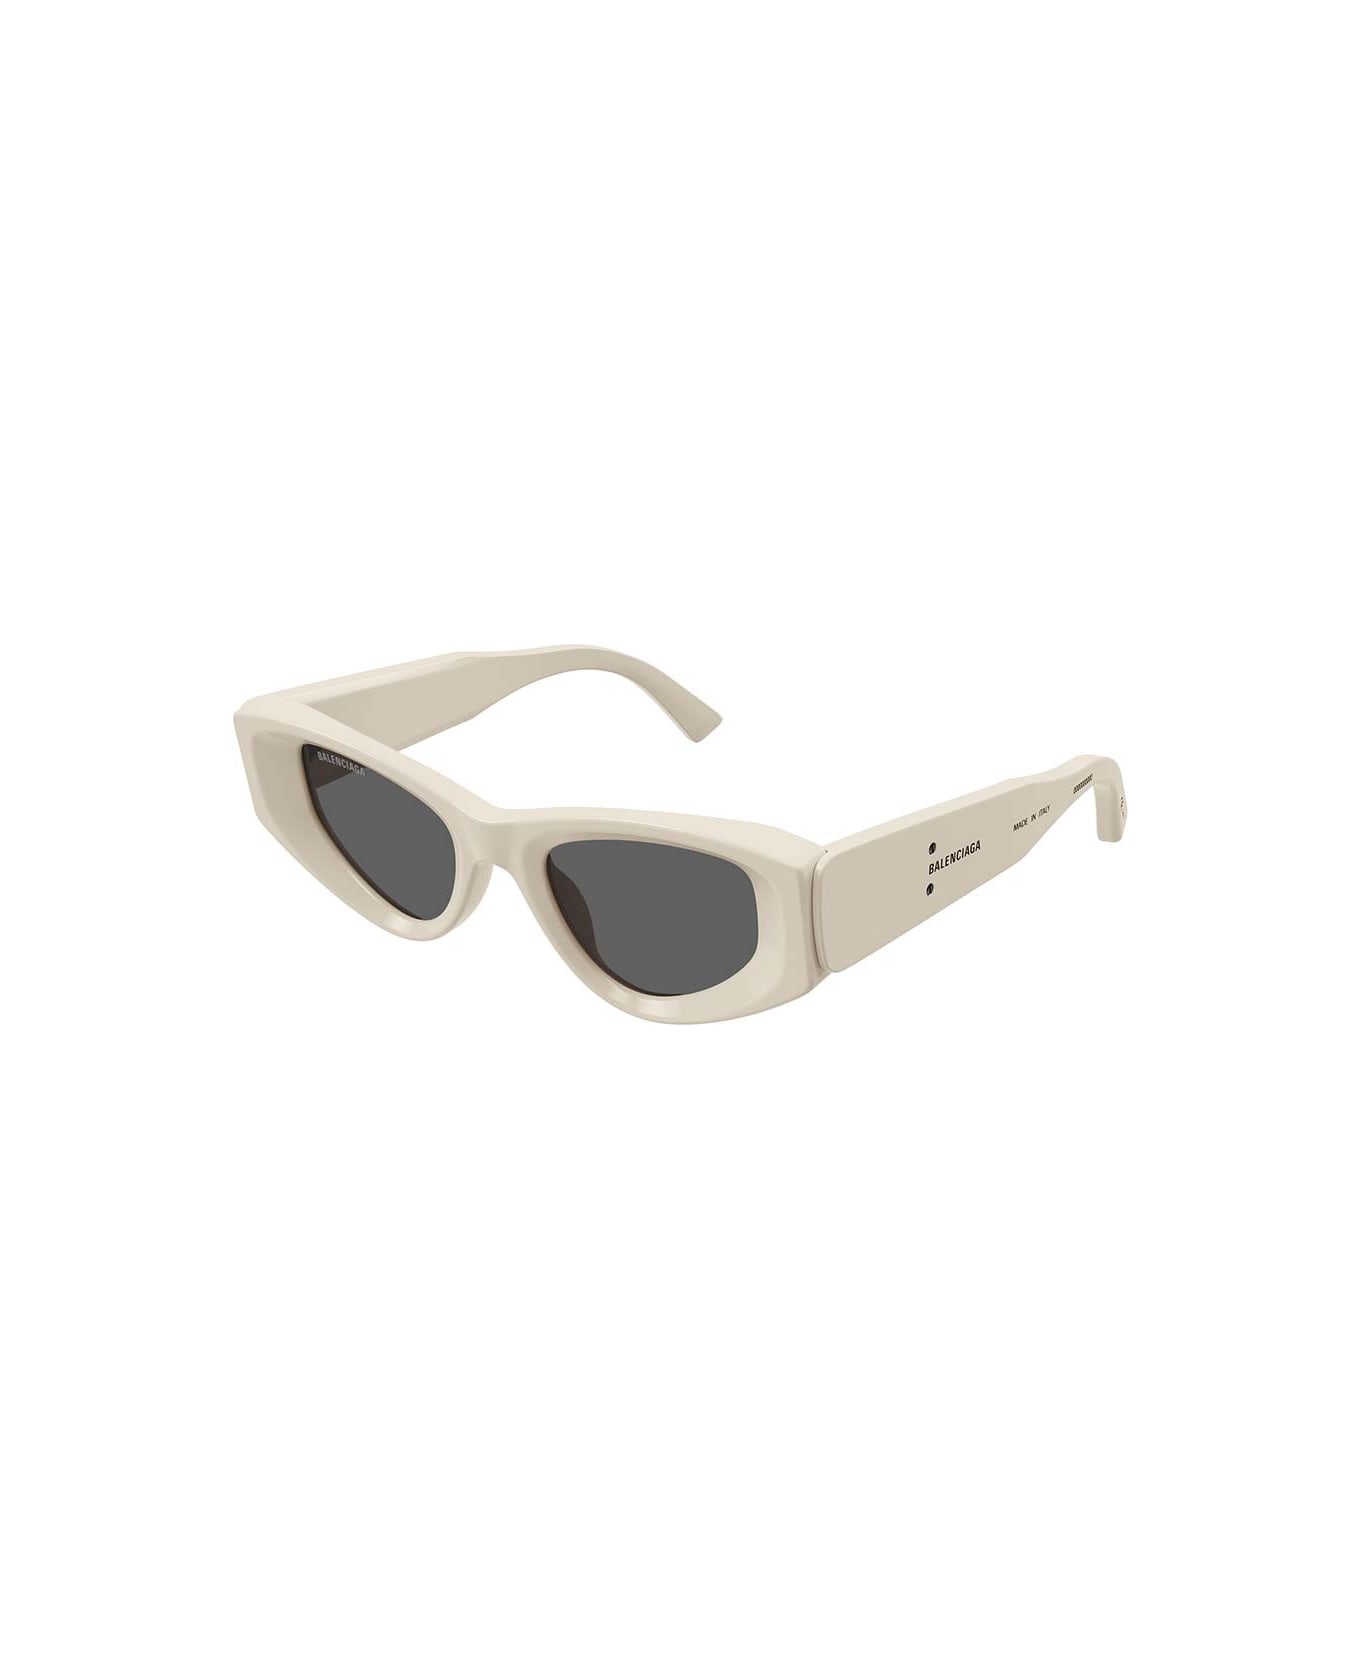 Balenciaga Eyewear Sunglasses - Beige/Grigio